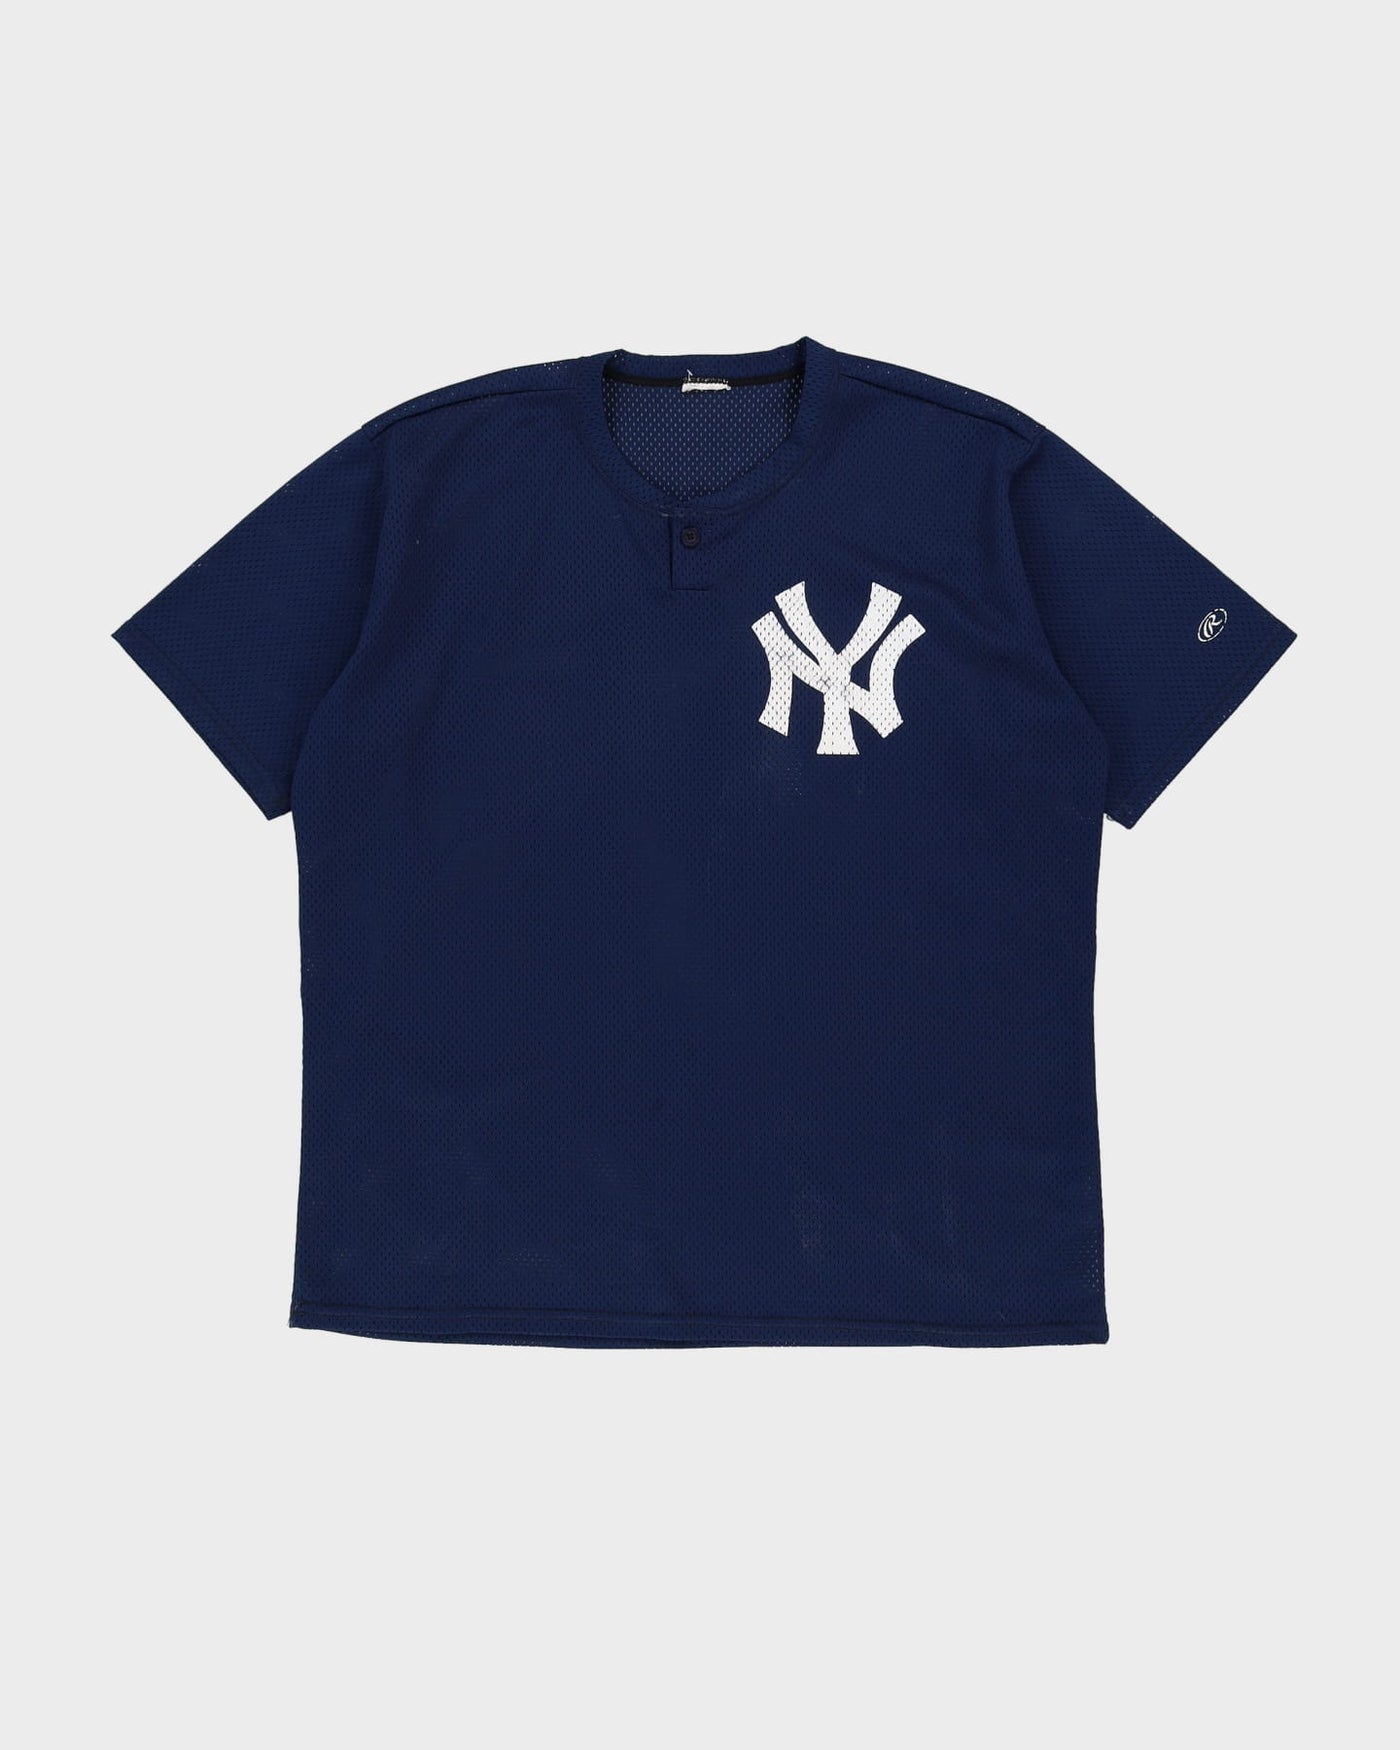 90s New York Yankees #44 MLB Navy Jersey - M